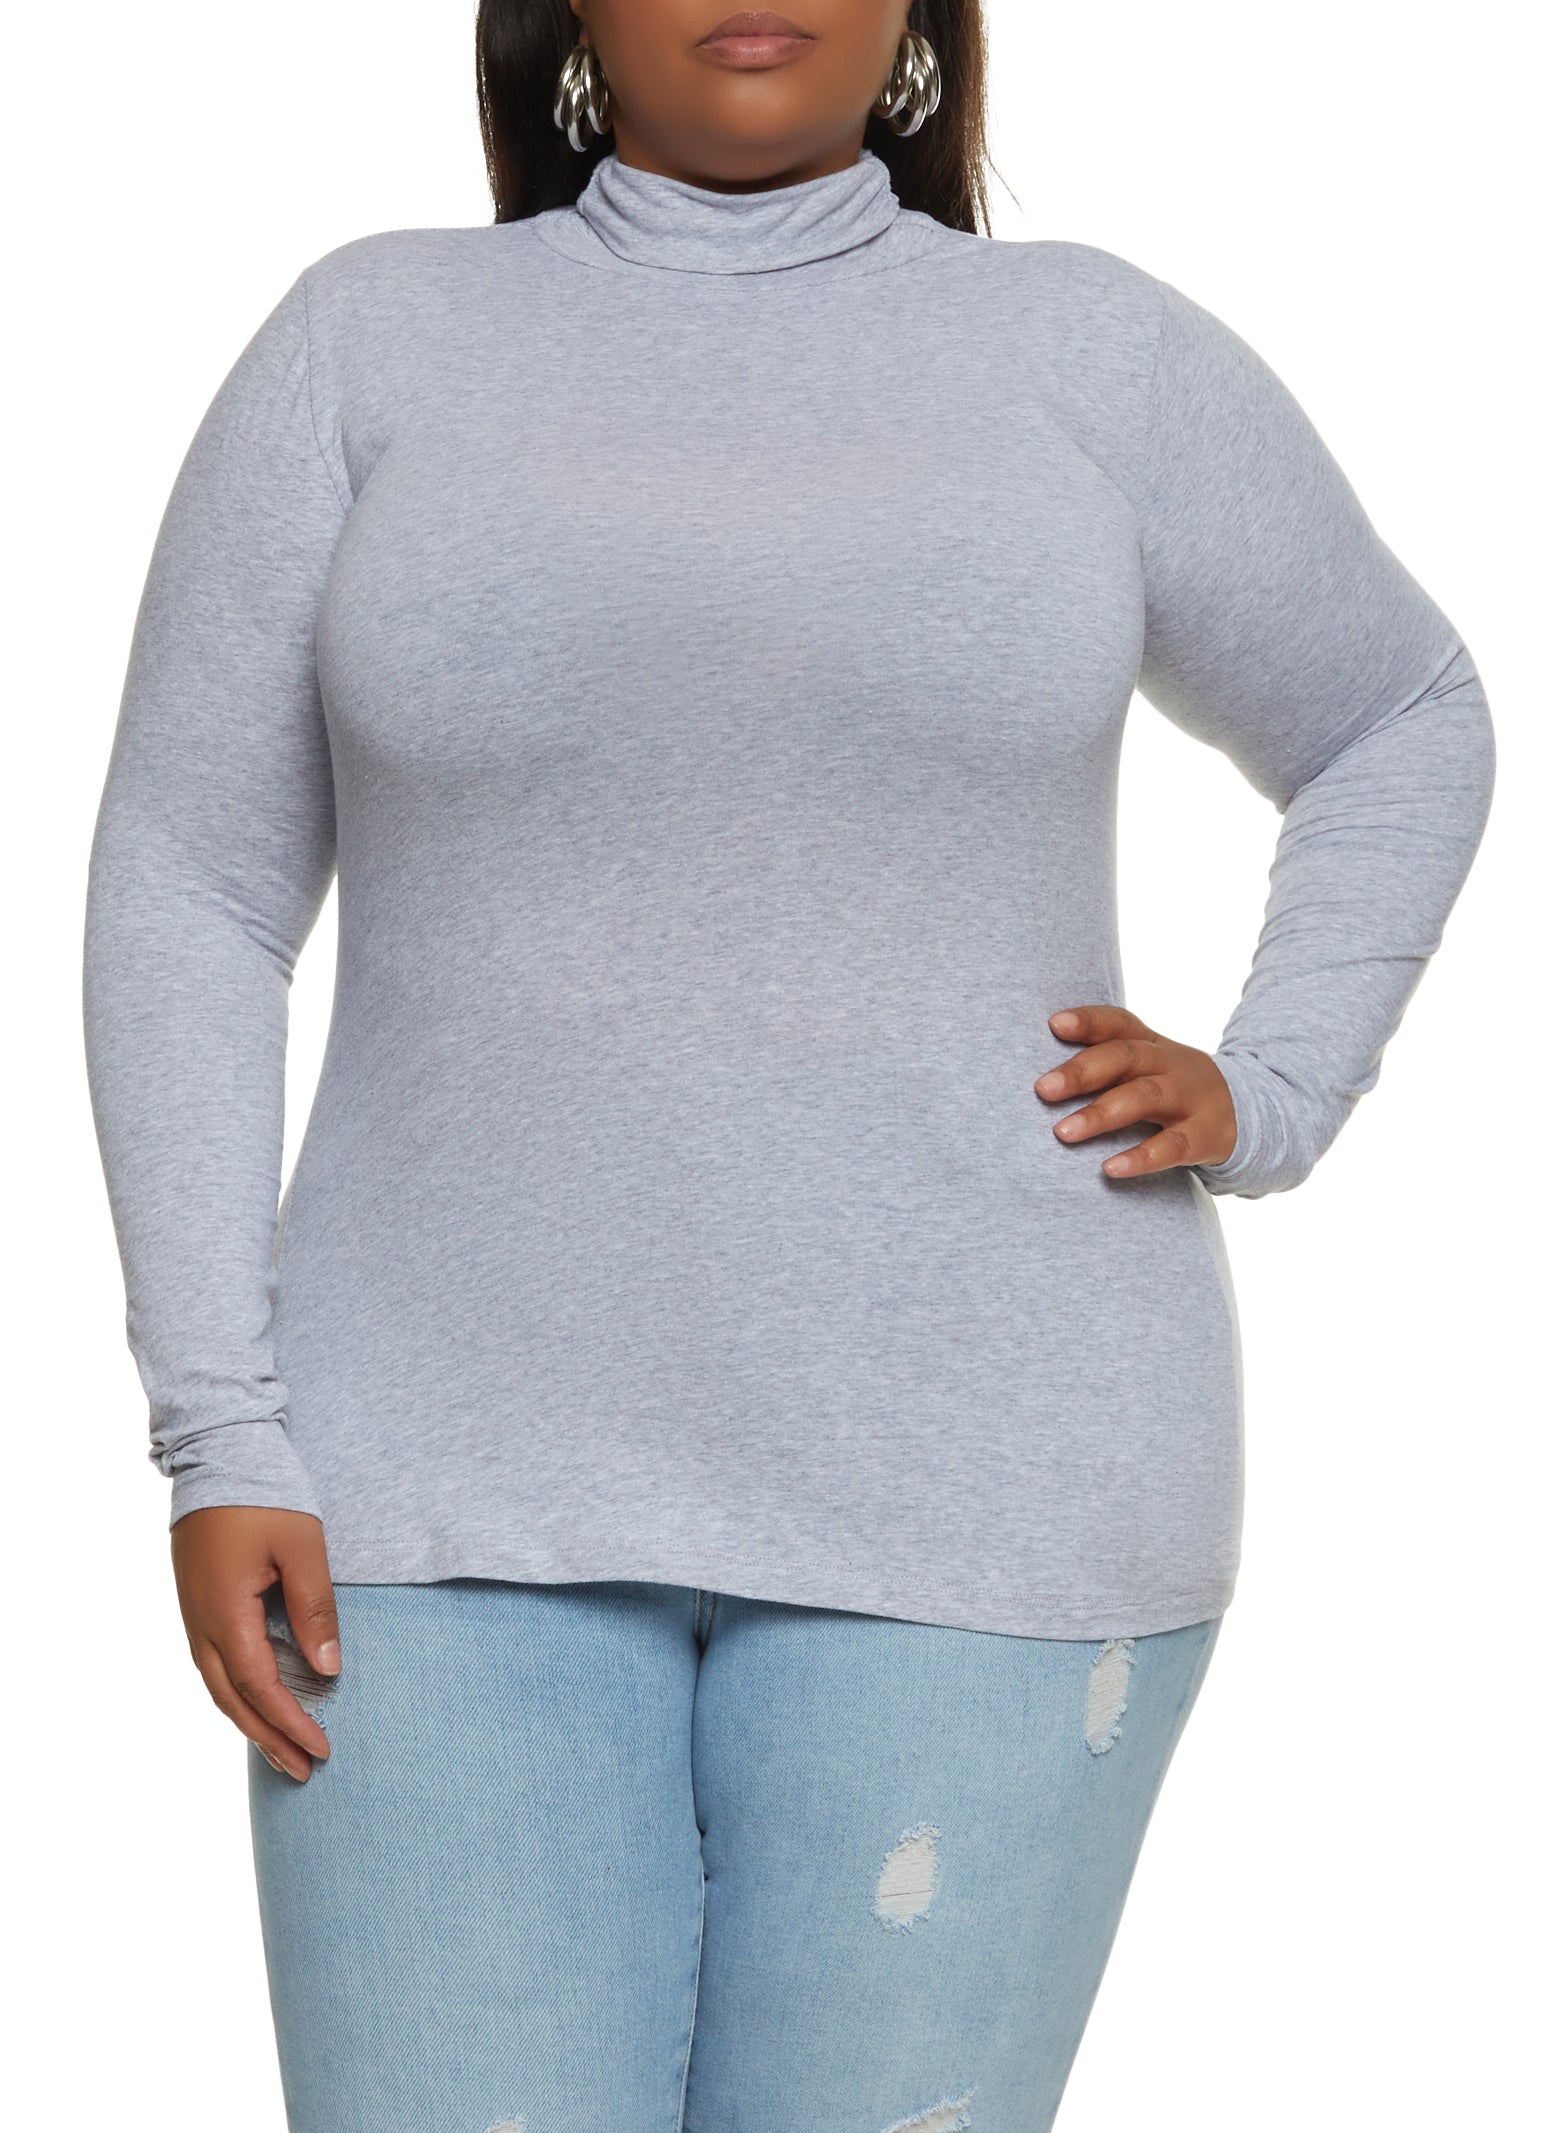 Womens Plus Size Long Sleeve Turtleneck Top, Grey, Size 1X